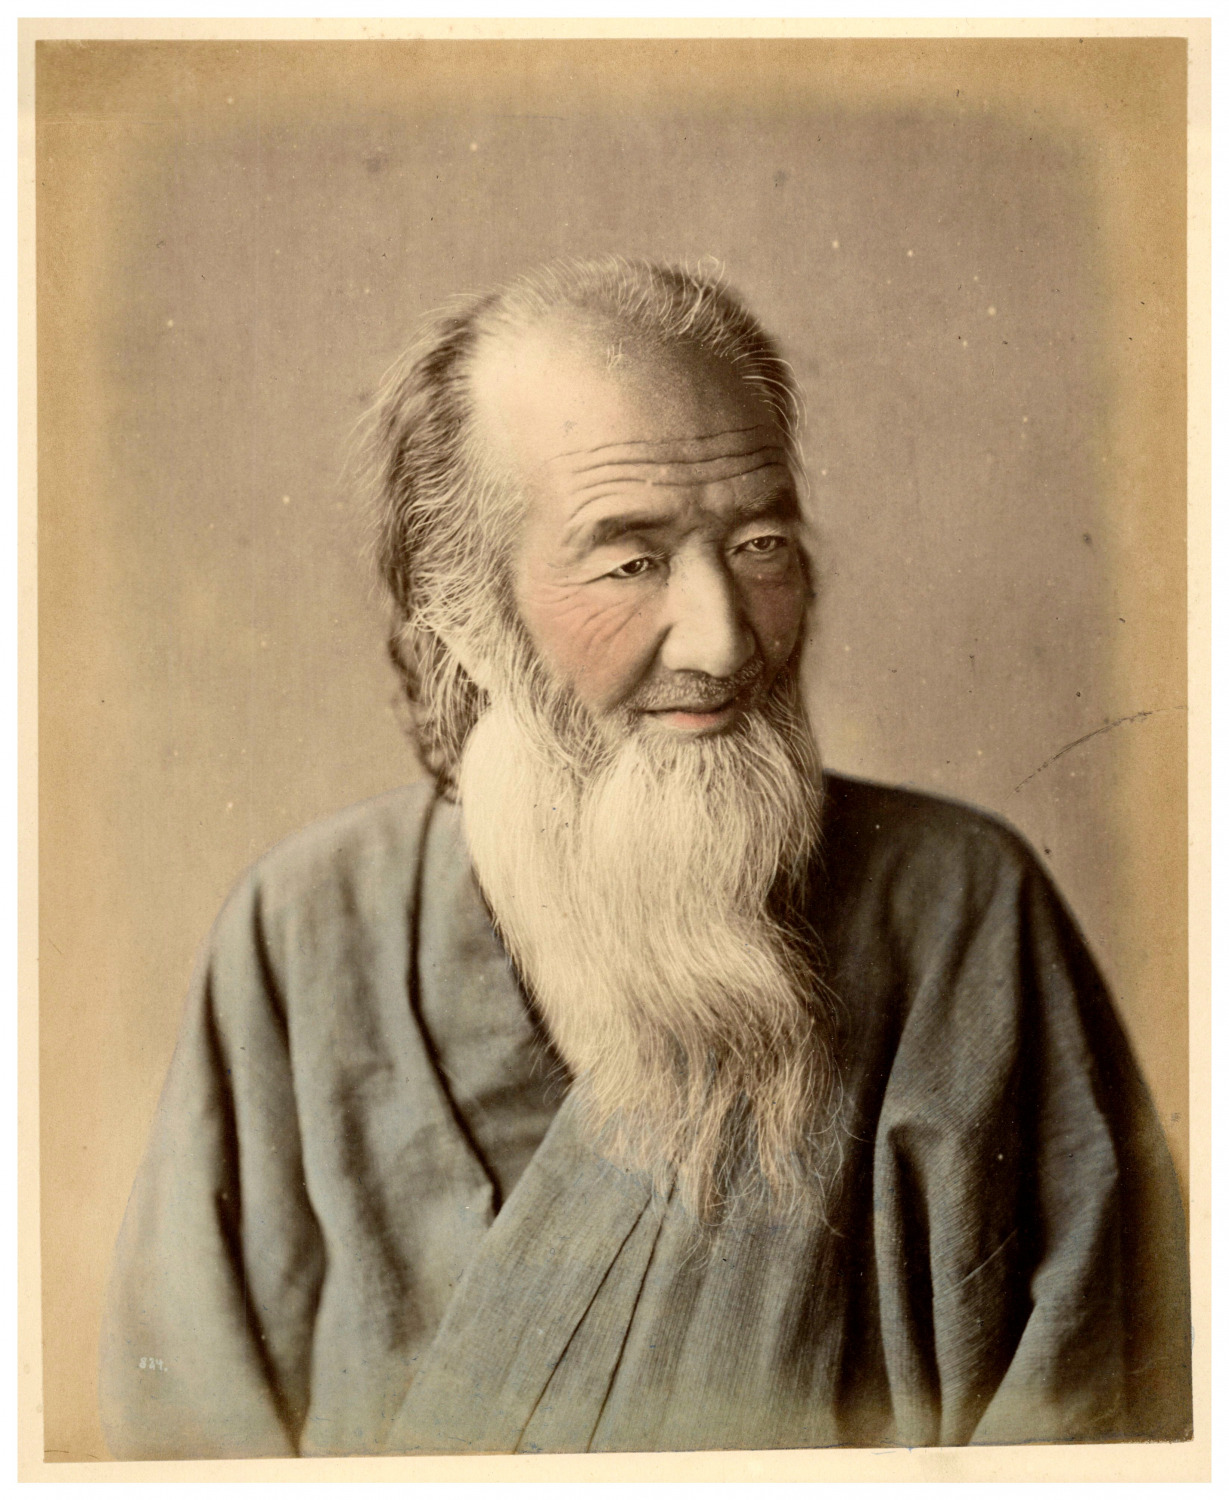 Japan, by Stillfried, Portrait of an Elderly Man Vintage Print, Drawing Album